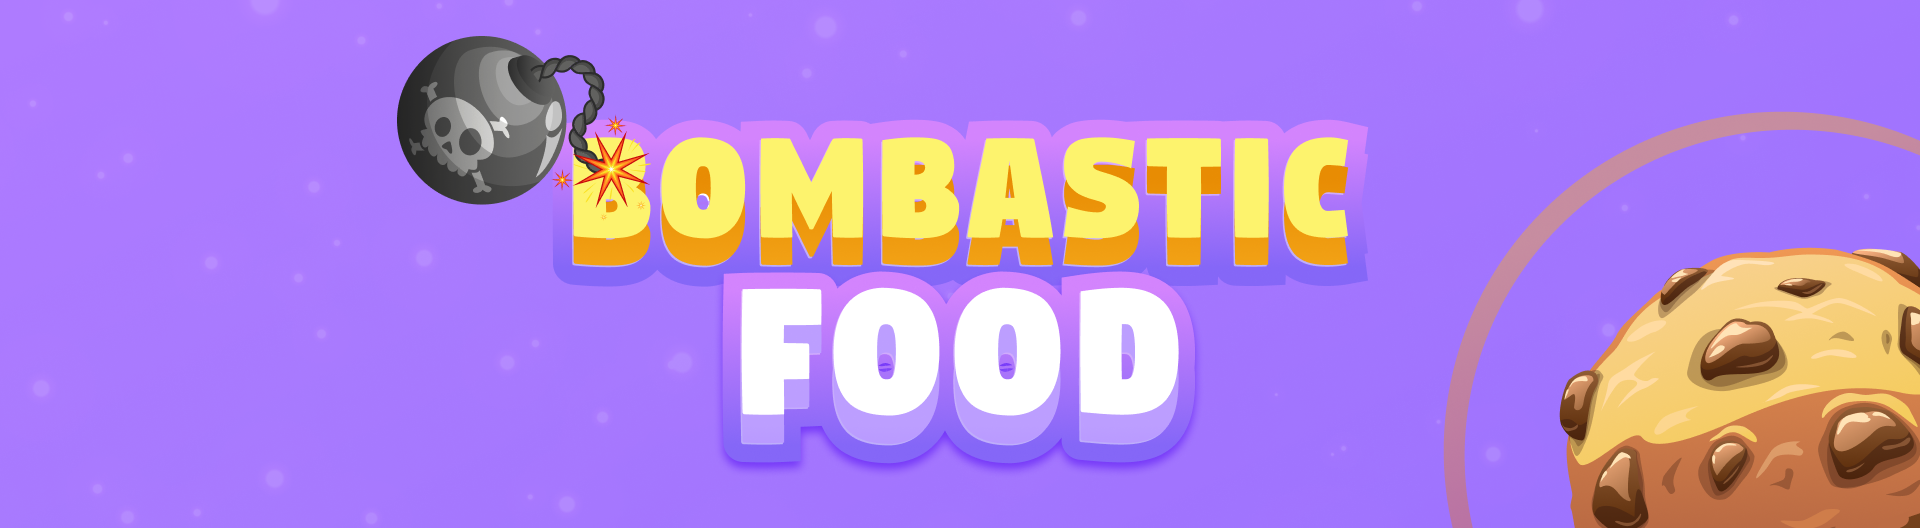 Bombastic Food